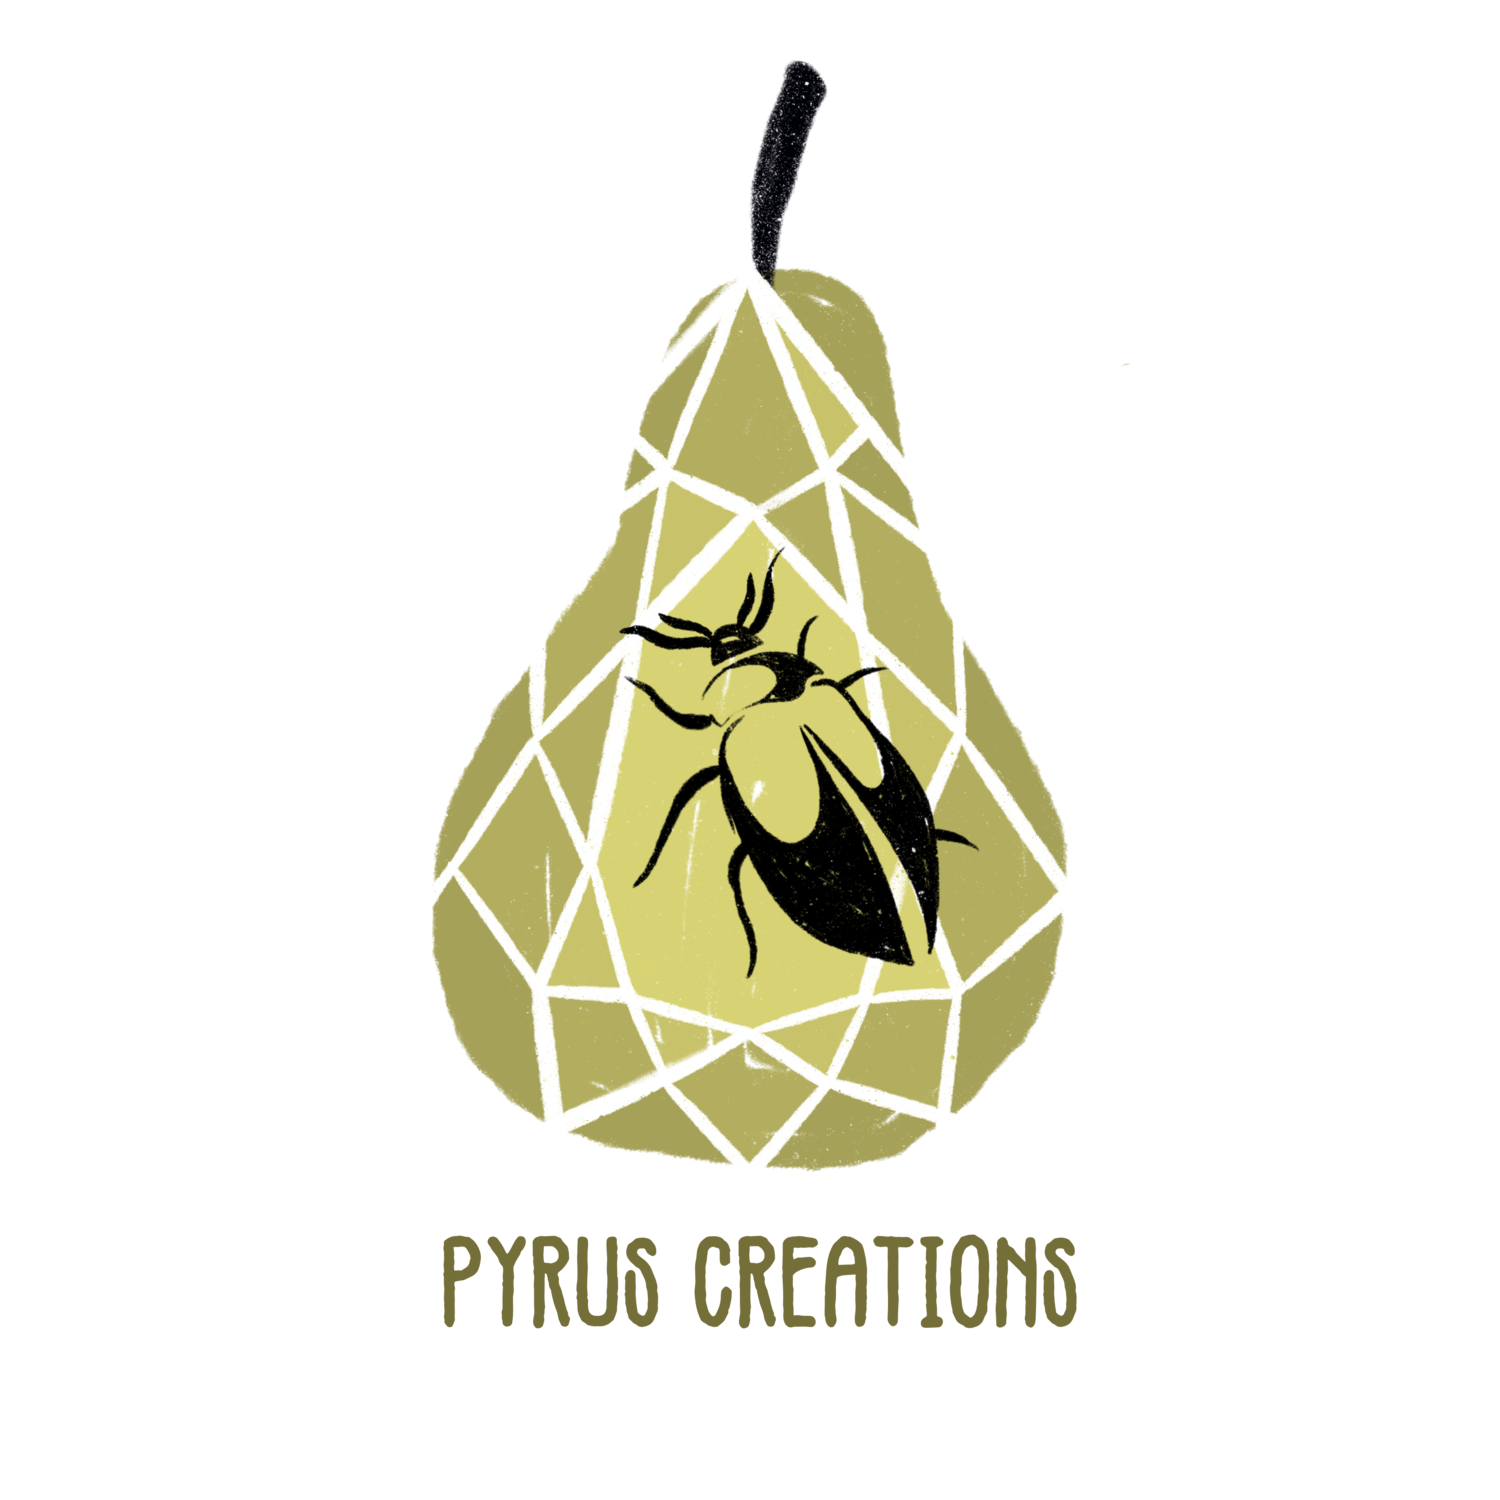 Pyrus Creations